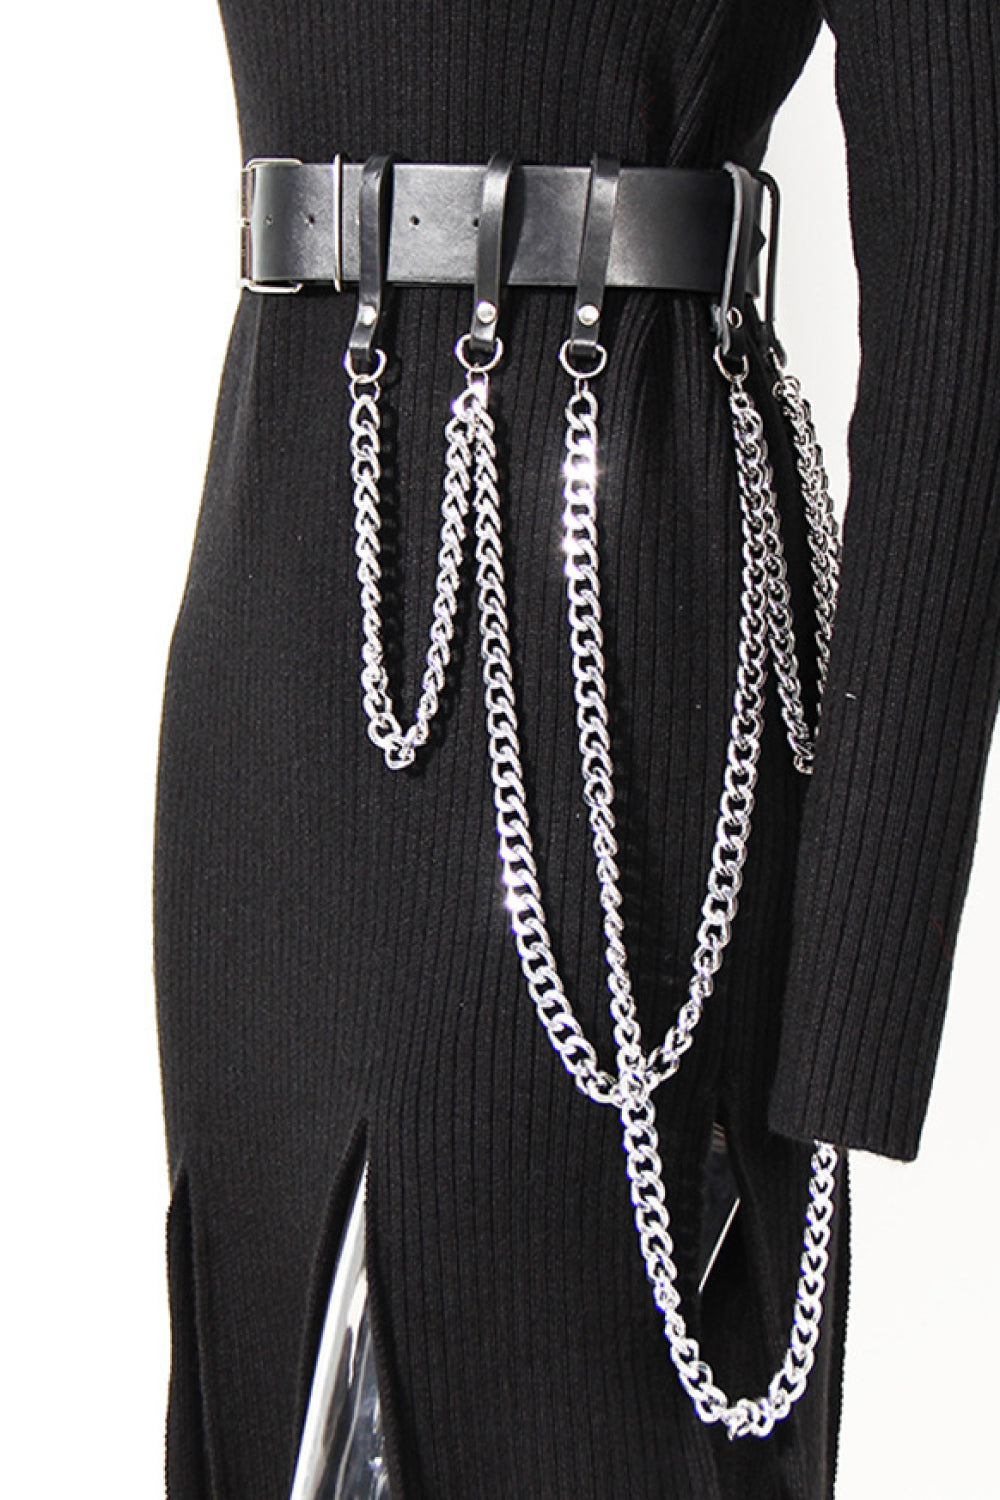 Dream Architect Asymmetrical Hem Knitted Dress with Chain Belt